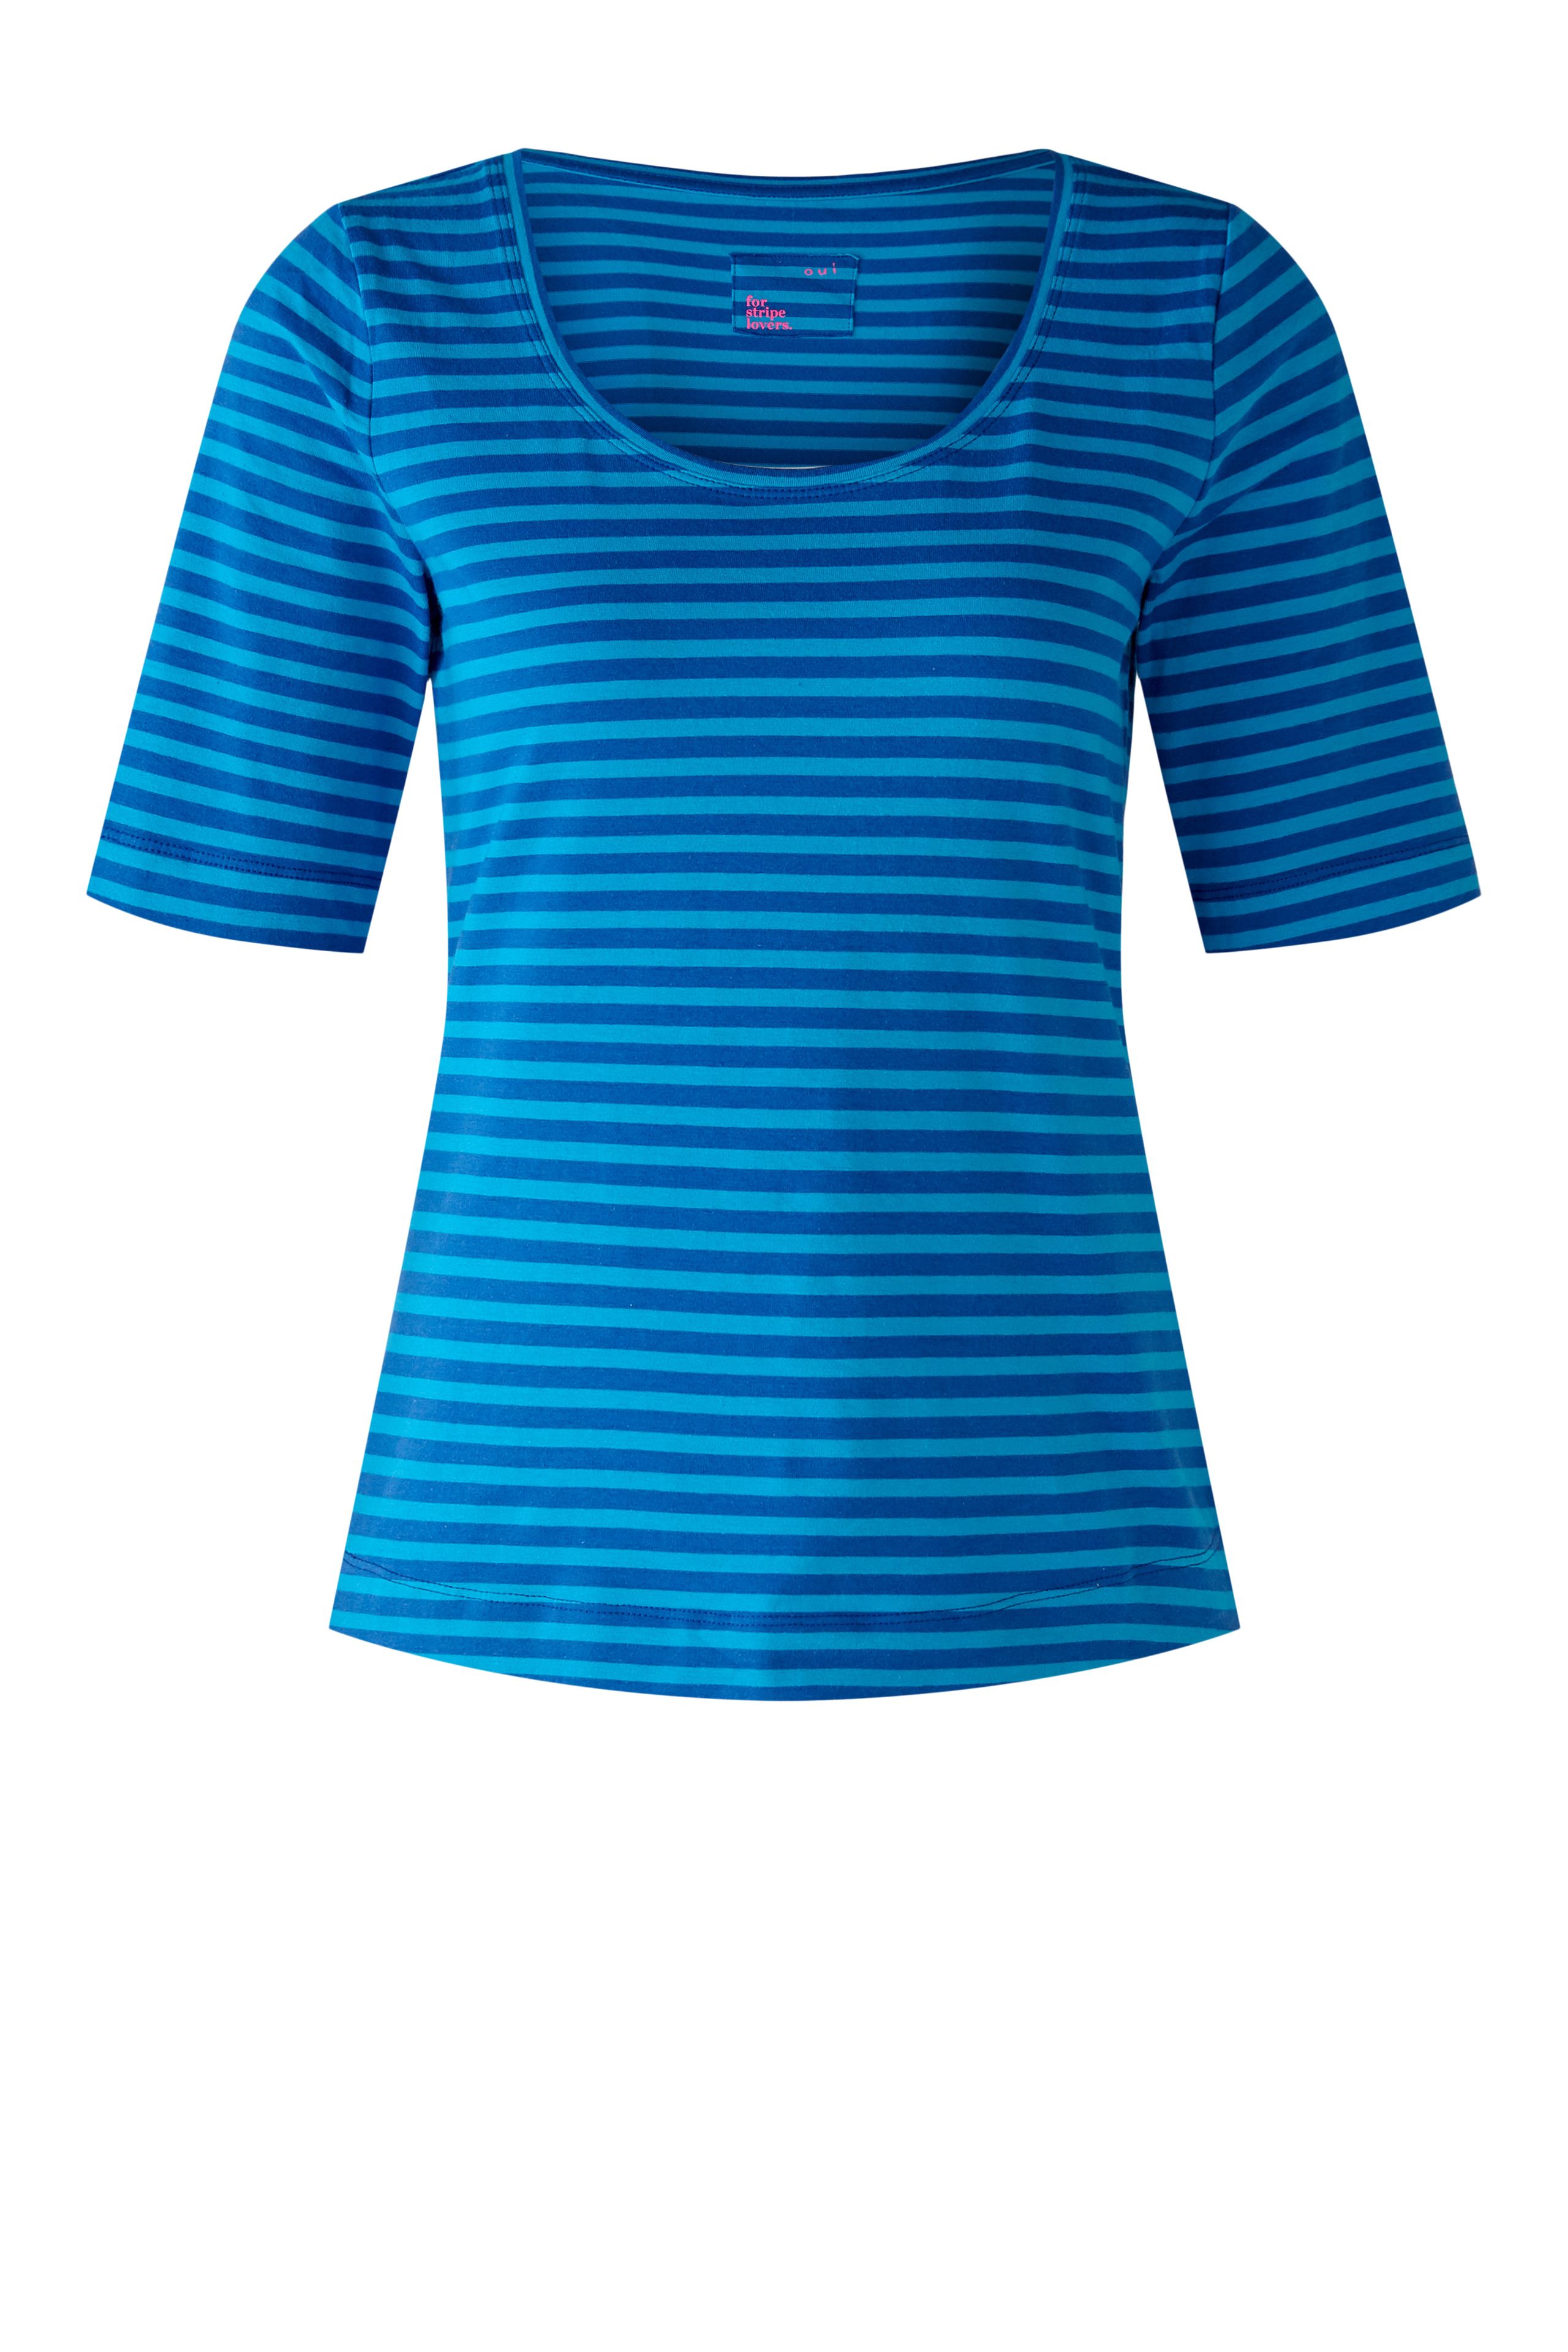 Oui T-Shirt 1/2 Arm  fine Stripe 36 blue